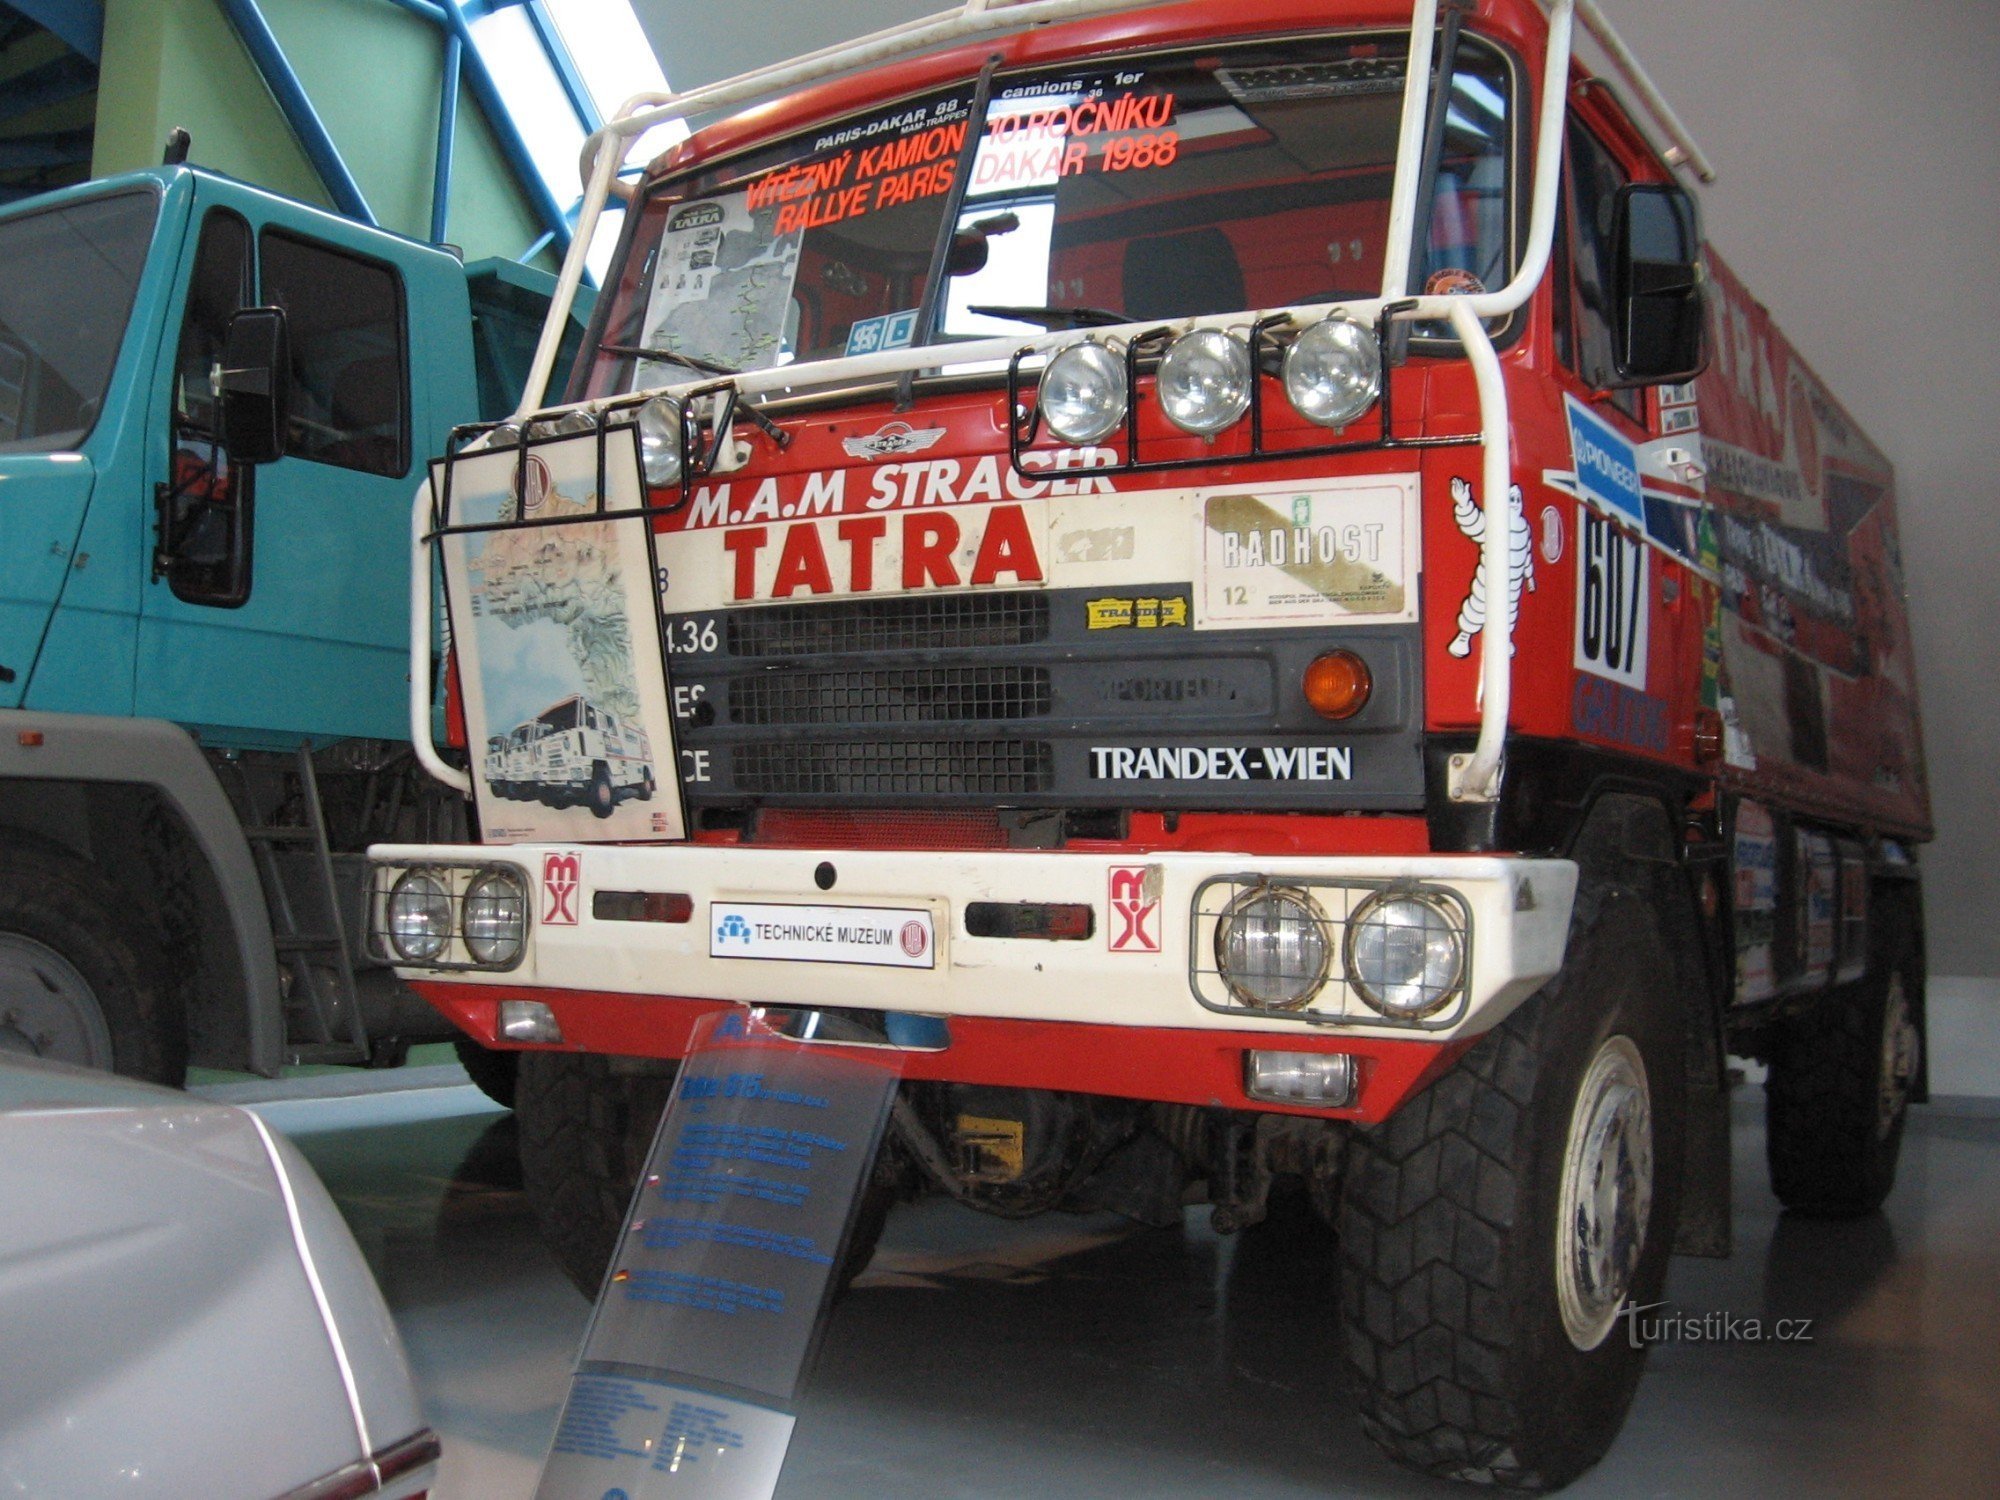 Kopřivnice - Museo Técnico Tatra - Mayo 2012